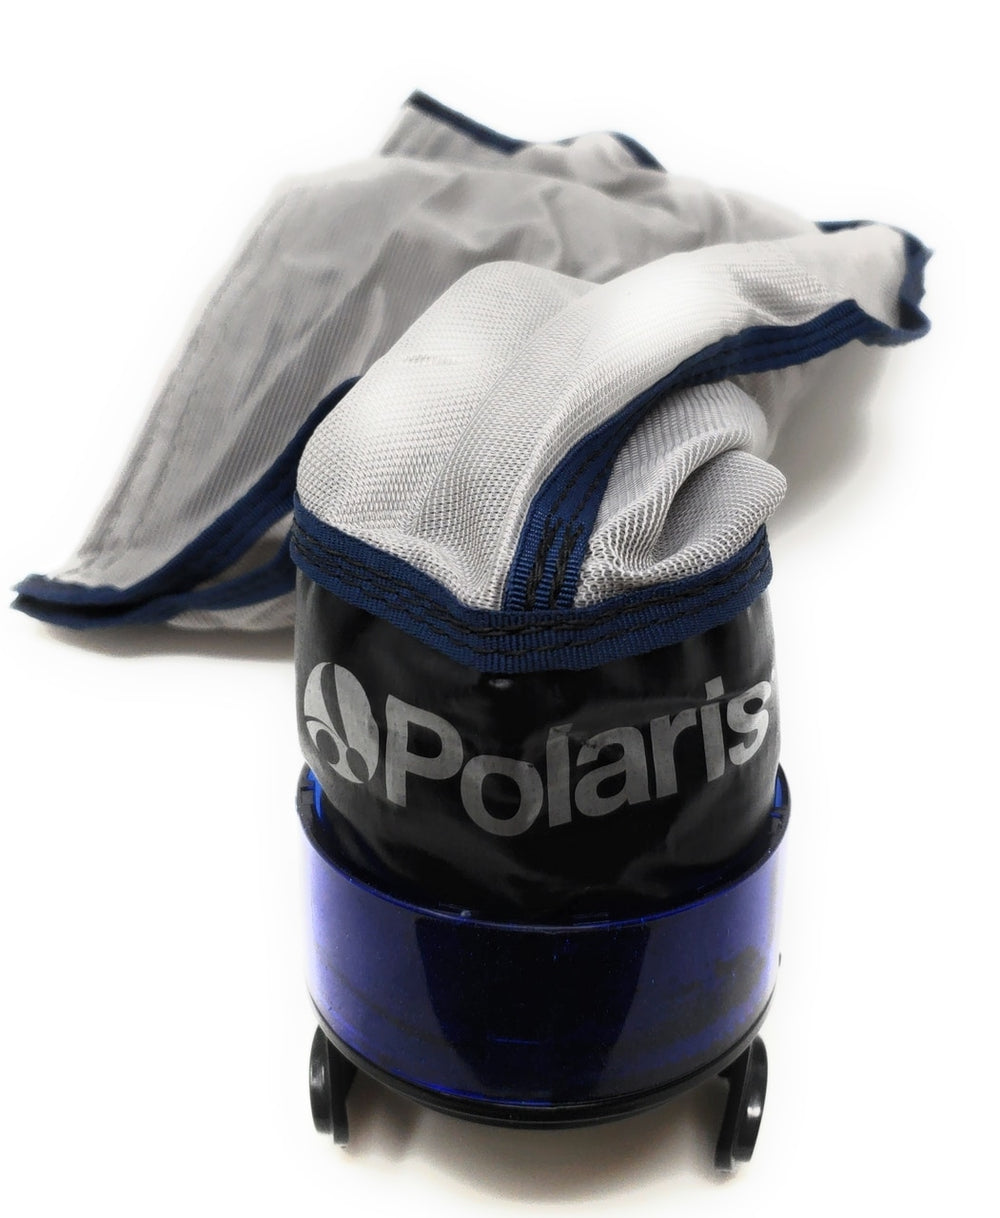 Front View - Polaris 3900 Sport SuperBag - ePoolSupply